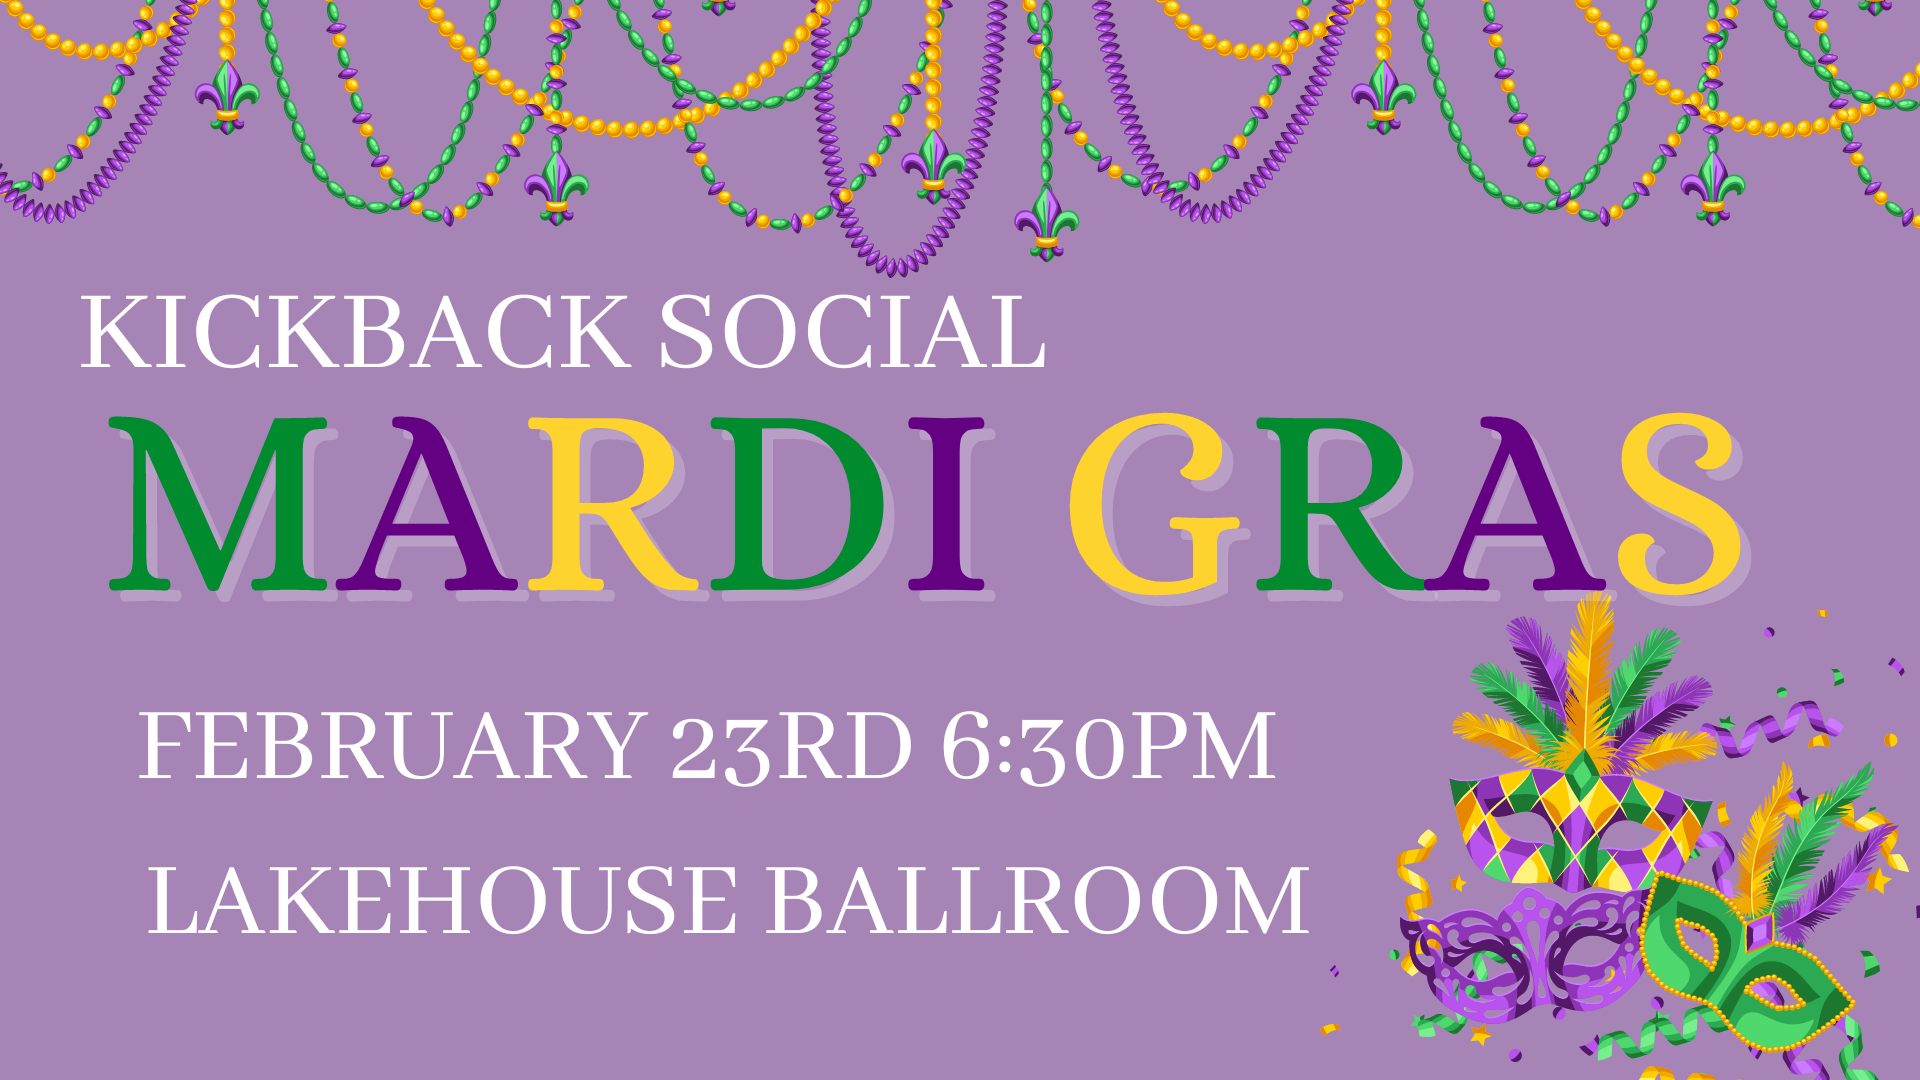 Mardi Gras Kick Back Social Set for February 23